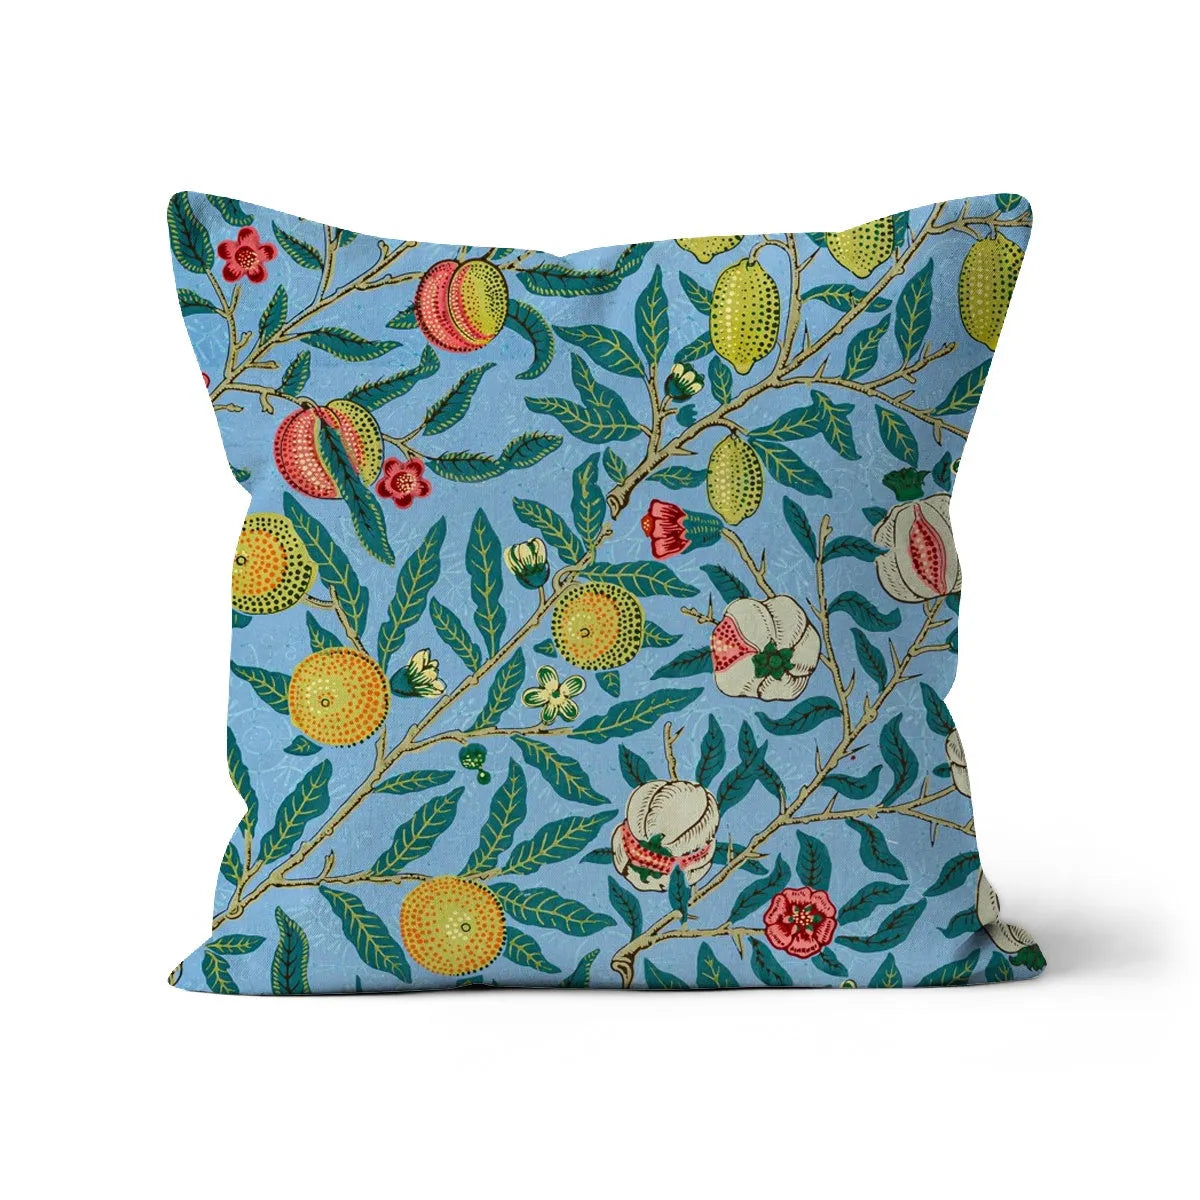 Four Fruits - William Morris Cushion - Decorative Throw Pillow - Linen / 18’x18’ - Throw Pillows - Aesthetic Art